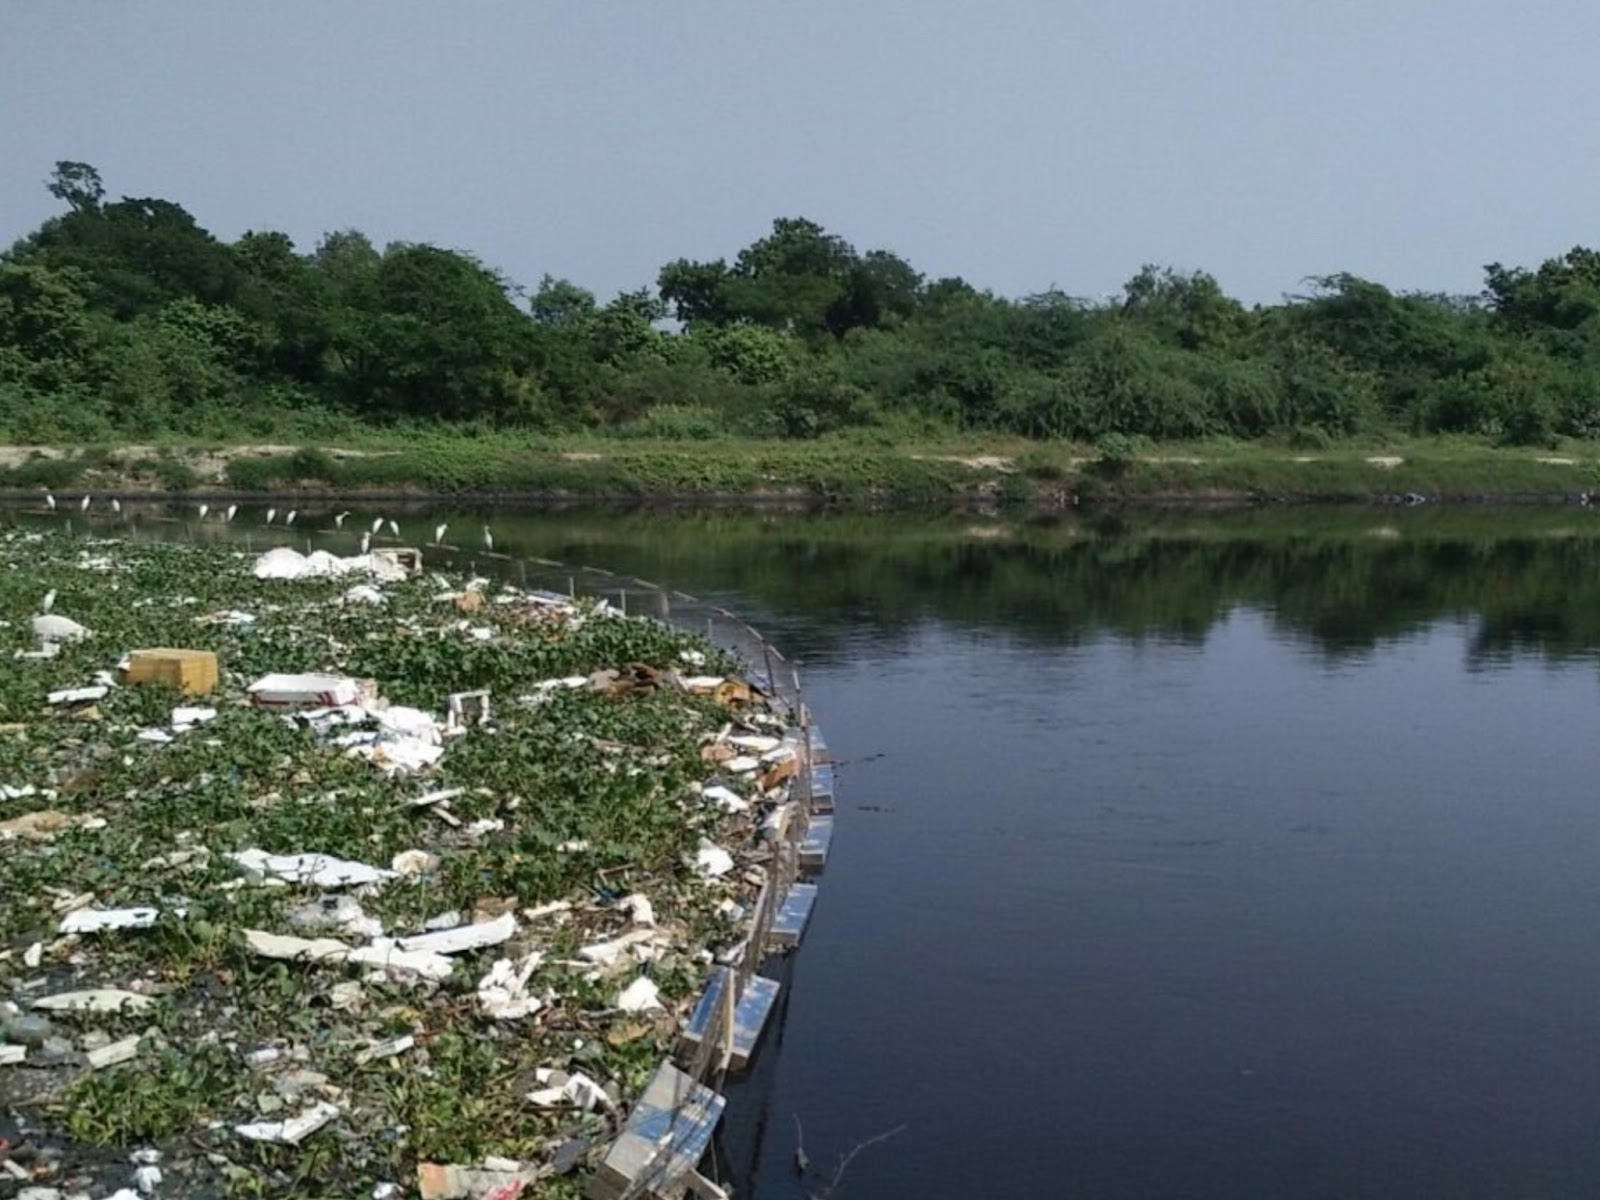 river pollution in india essay